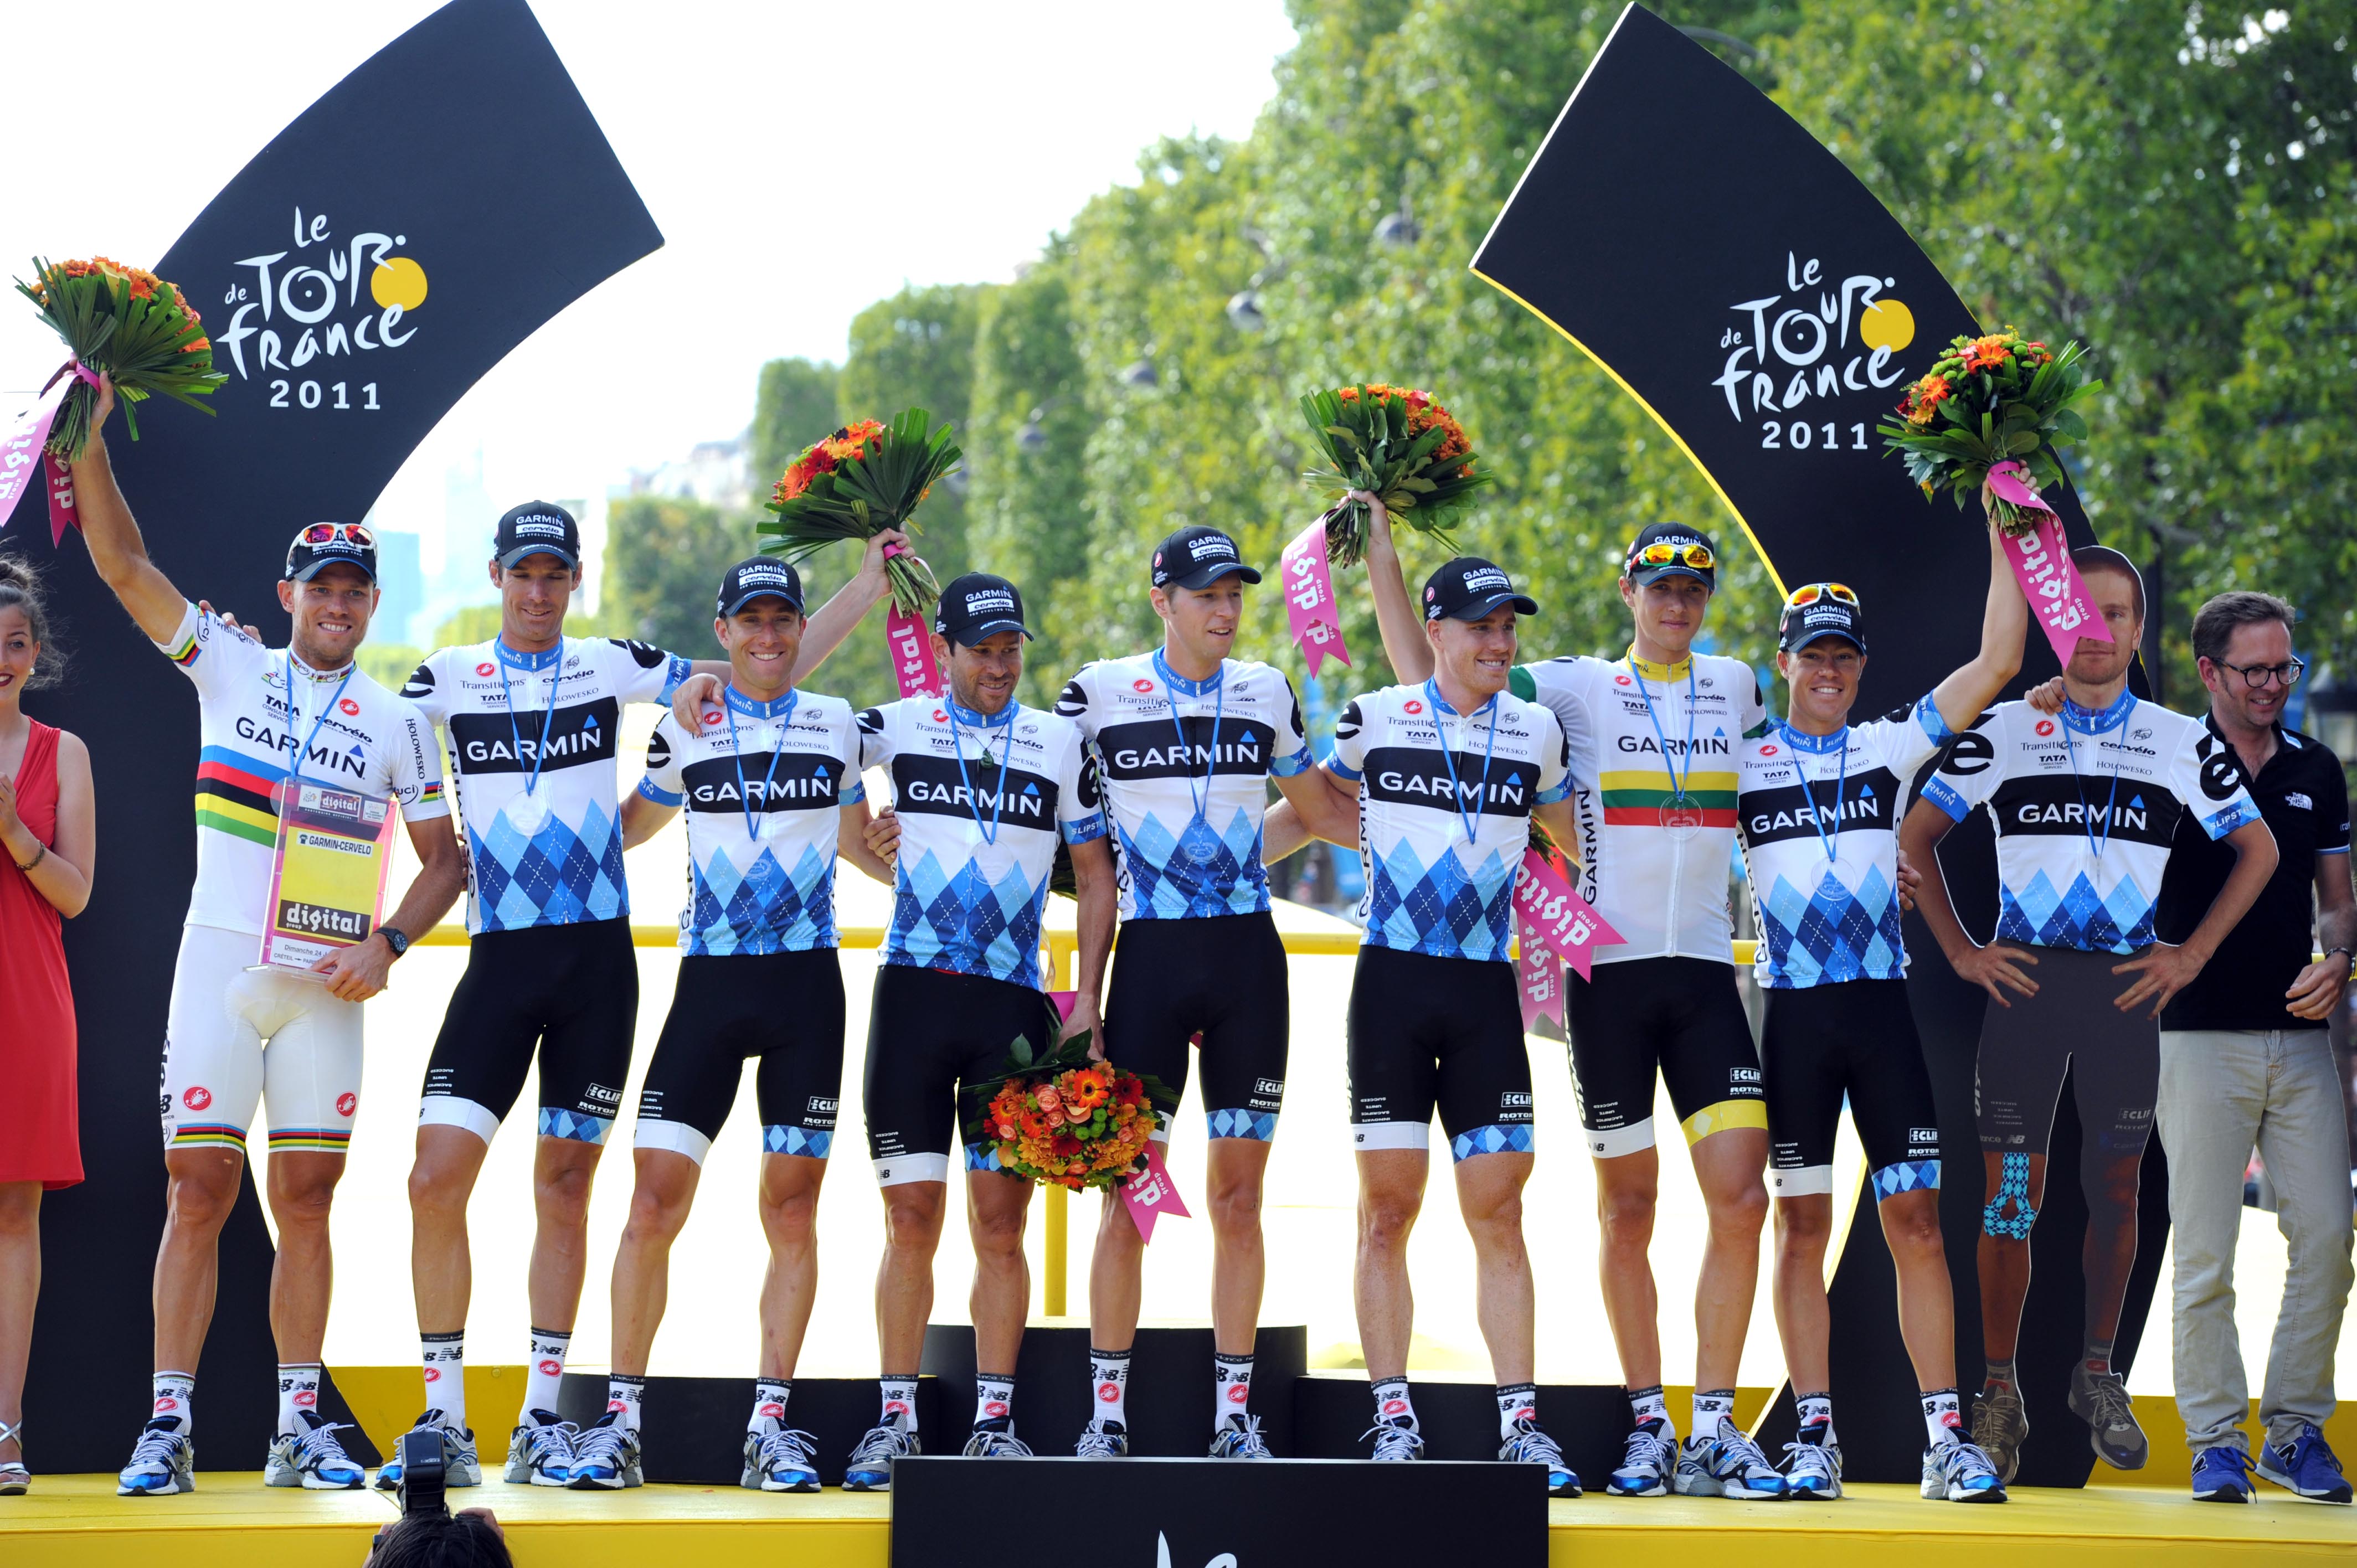 universitetsstuderende klinke Transplant Tour de France: Garmin takes podium in Paris as Tour's top team - Garmin  Blog